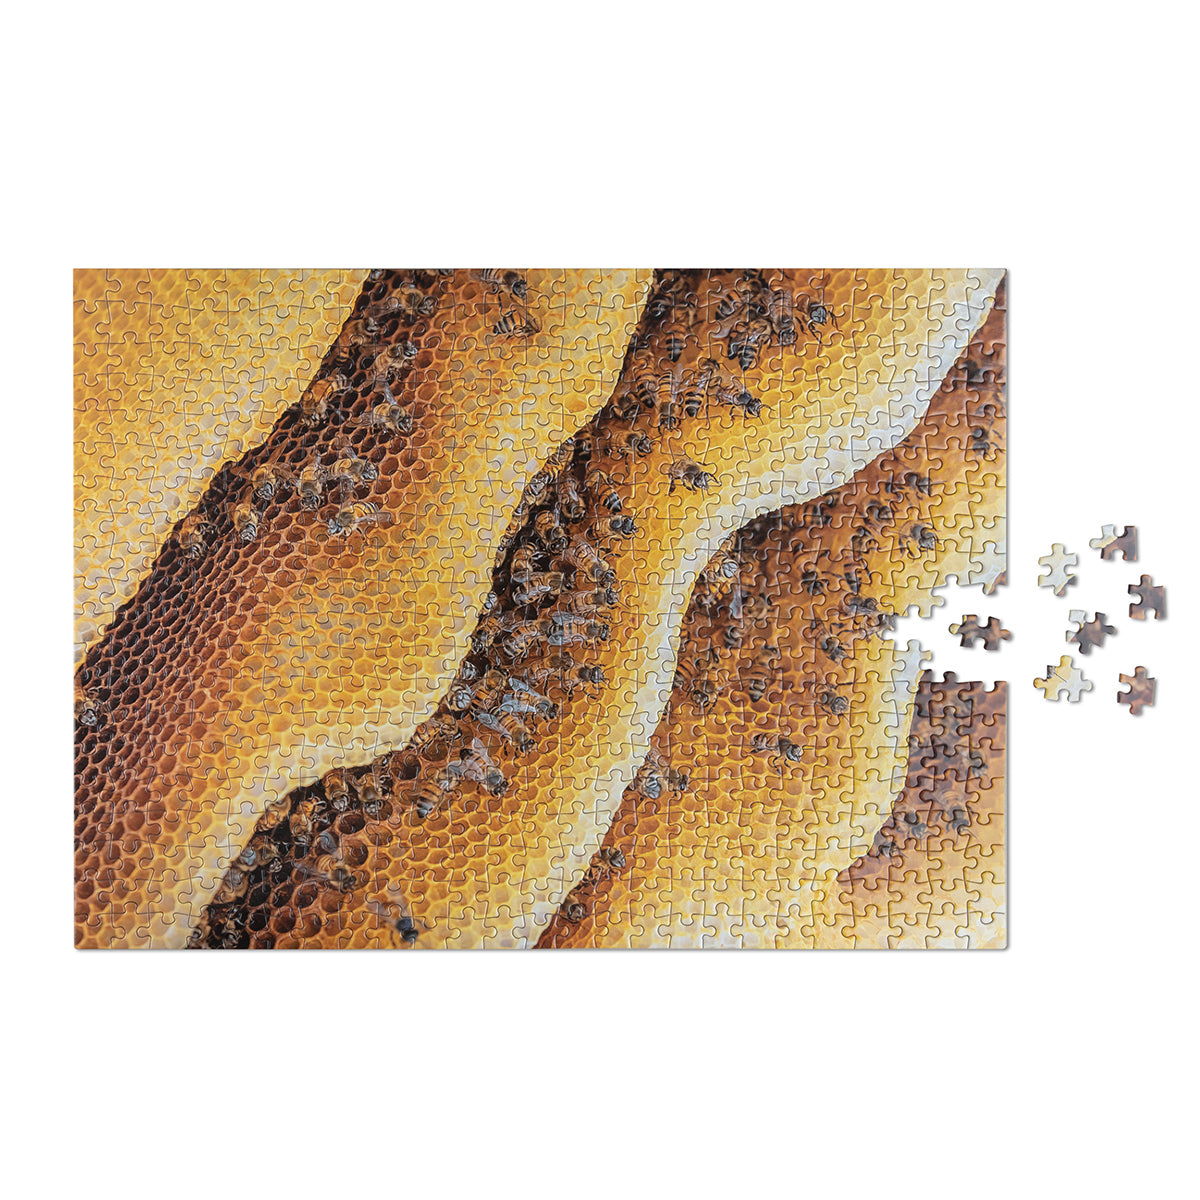 Puzzle Bee (500 Piece)